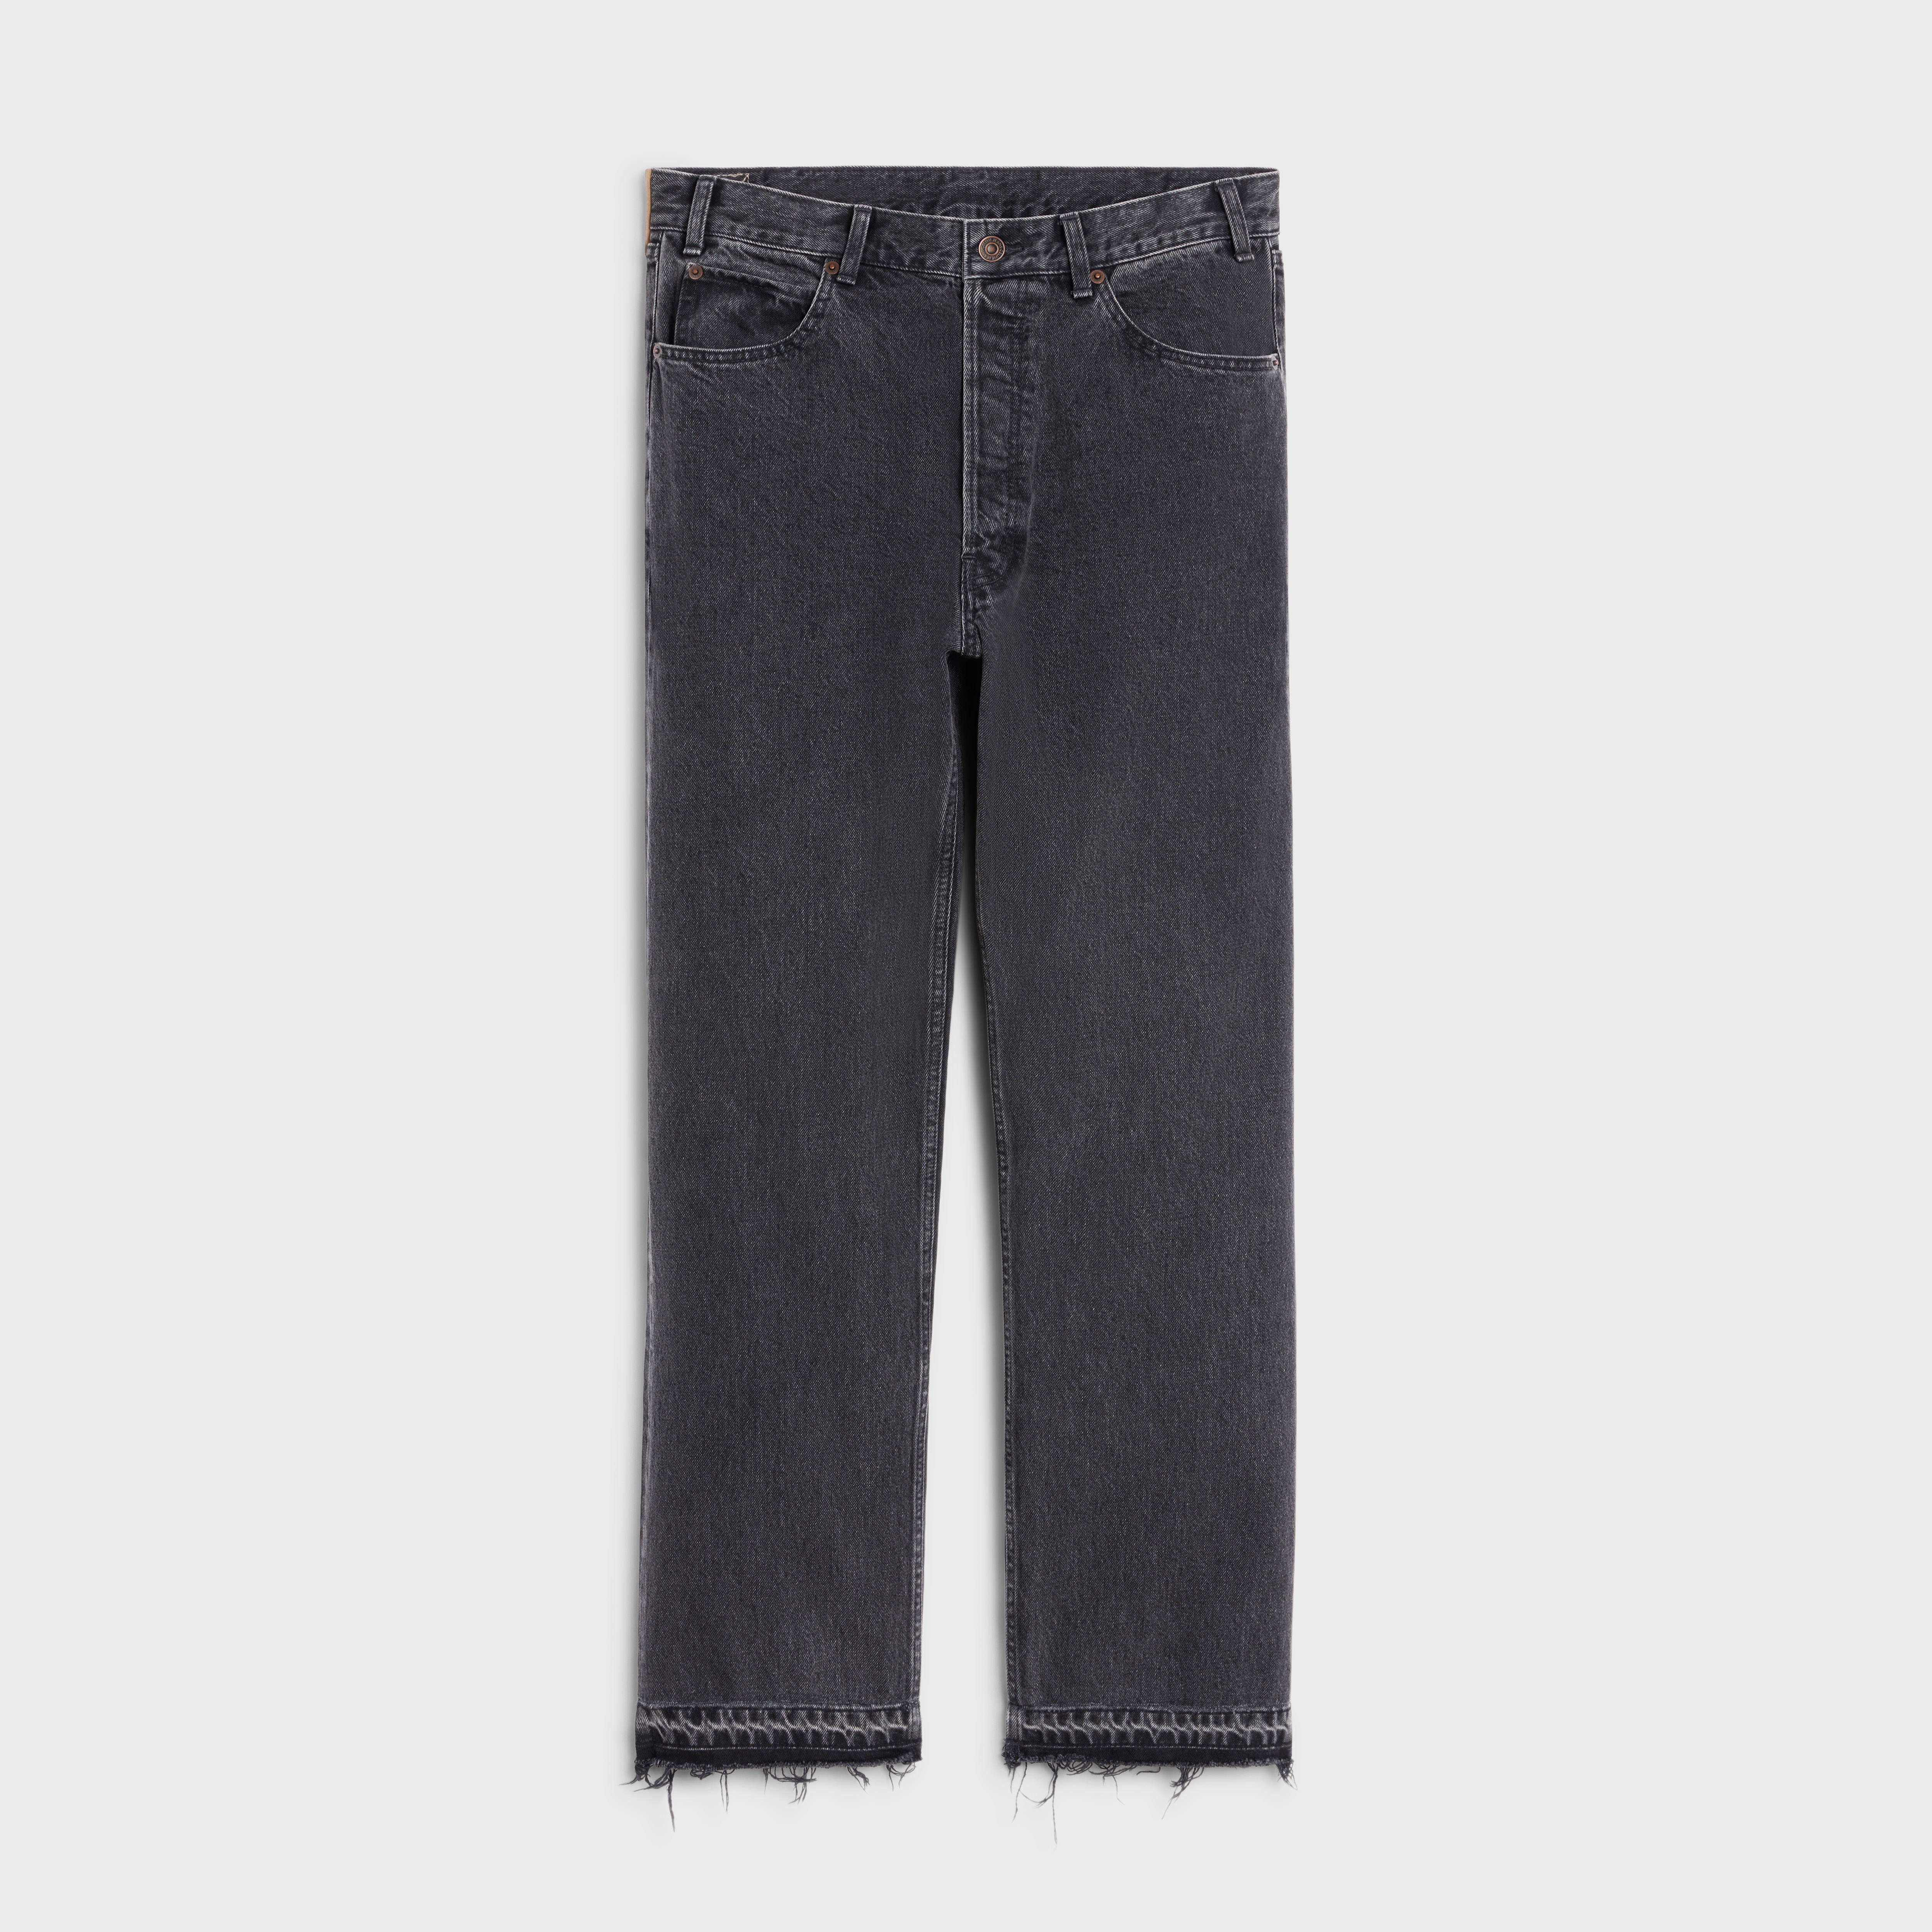 Wesley jeans in charcoal wash denim - 1